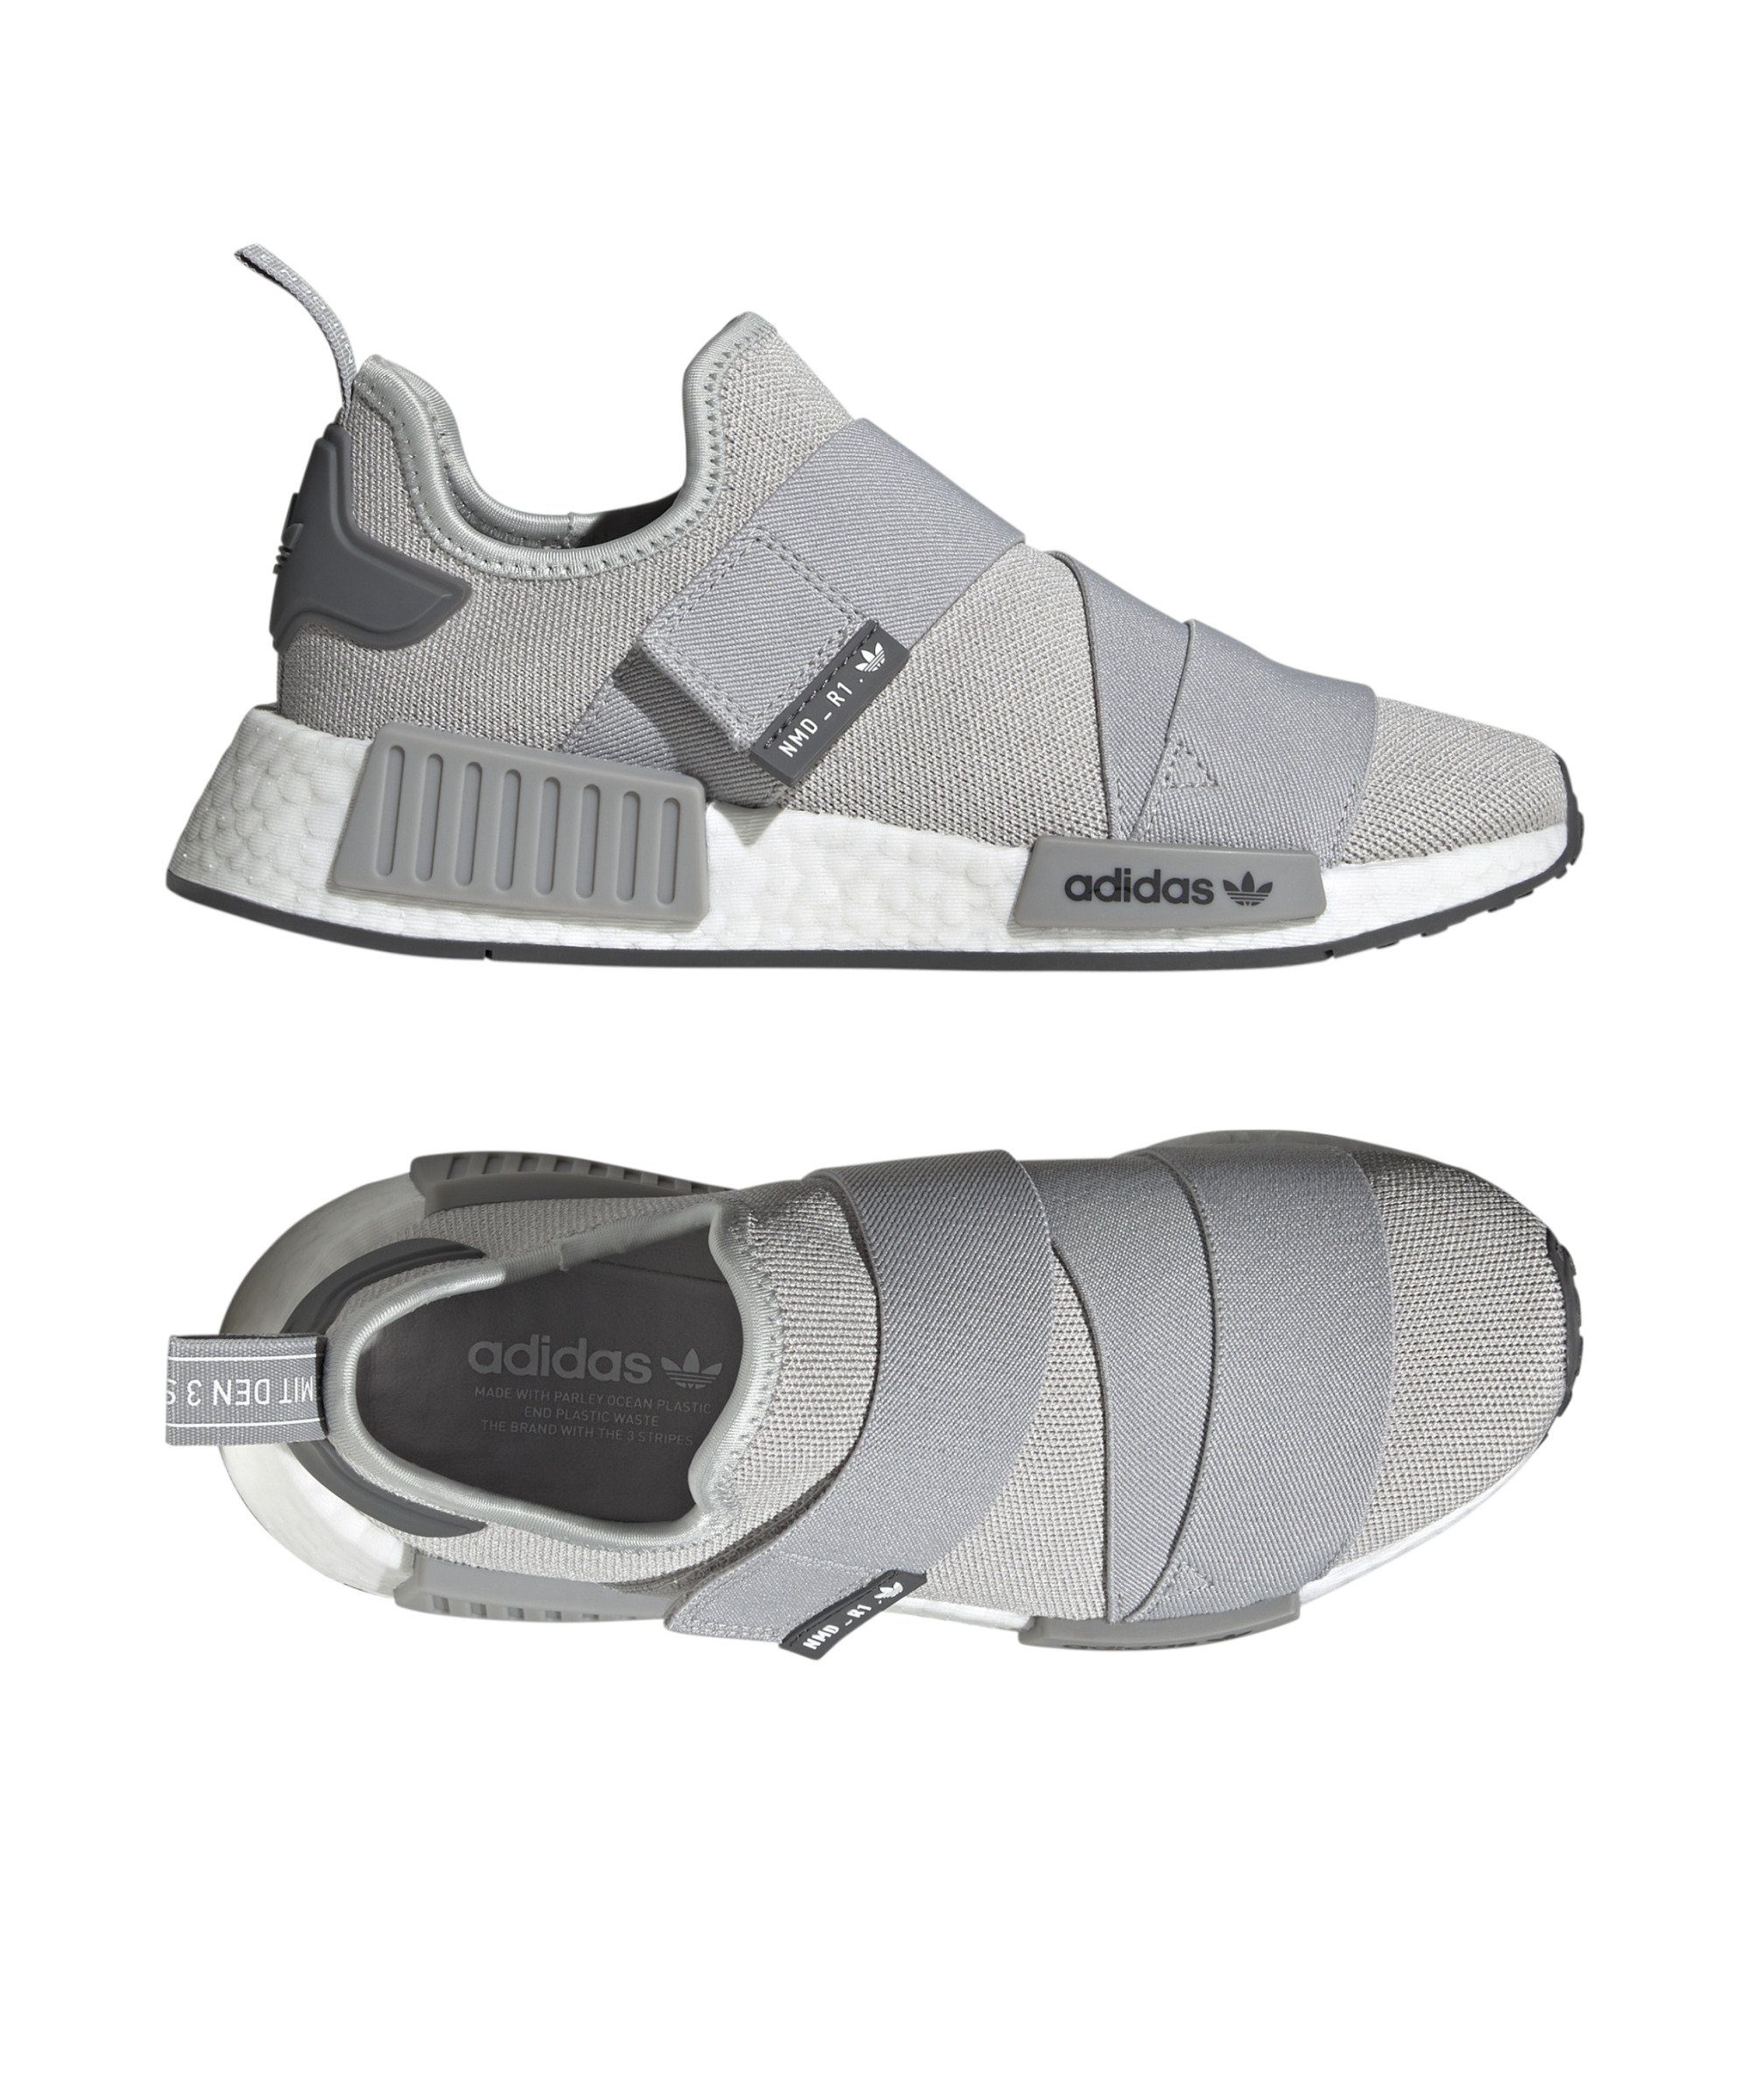 adidas Originals NMD_R1 grau Sneaker Strap Damen